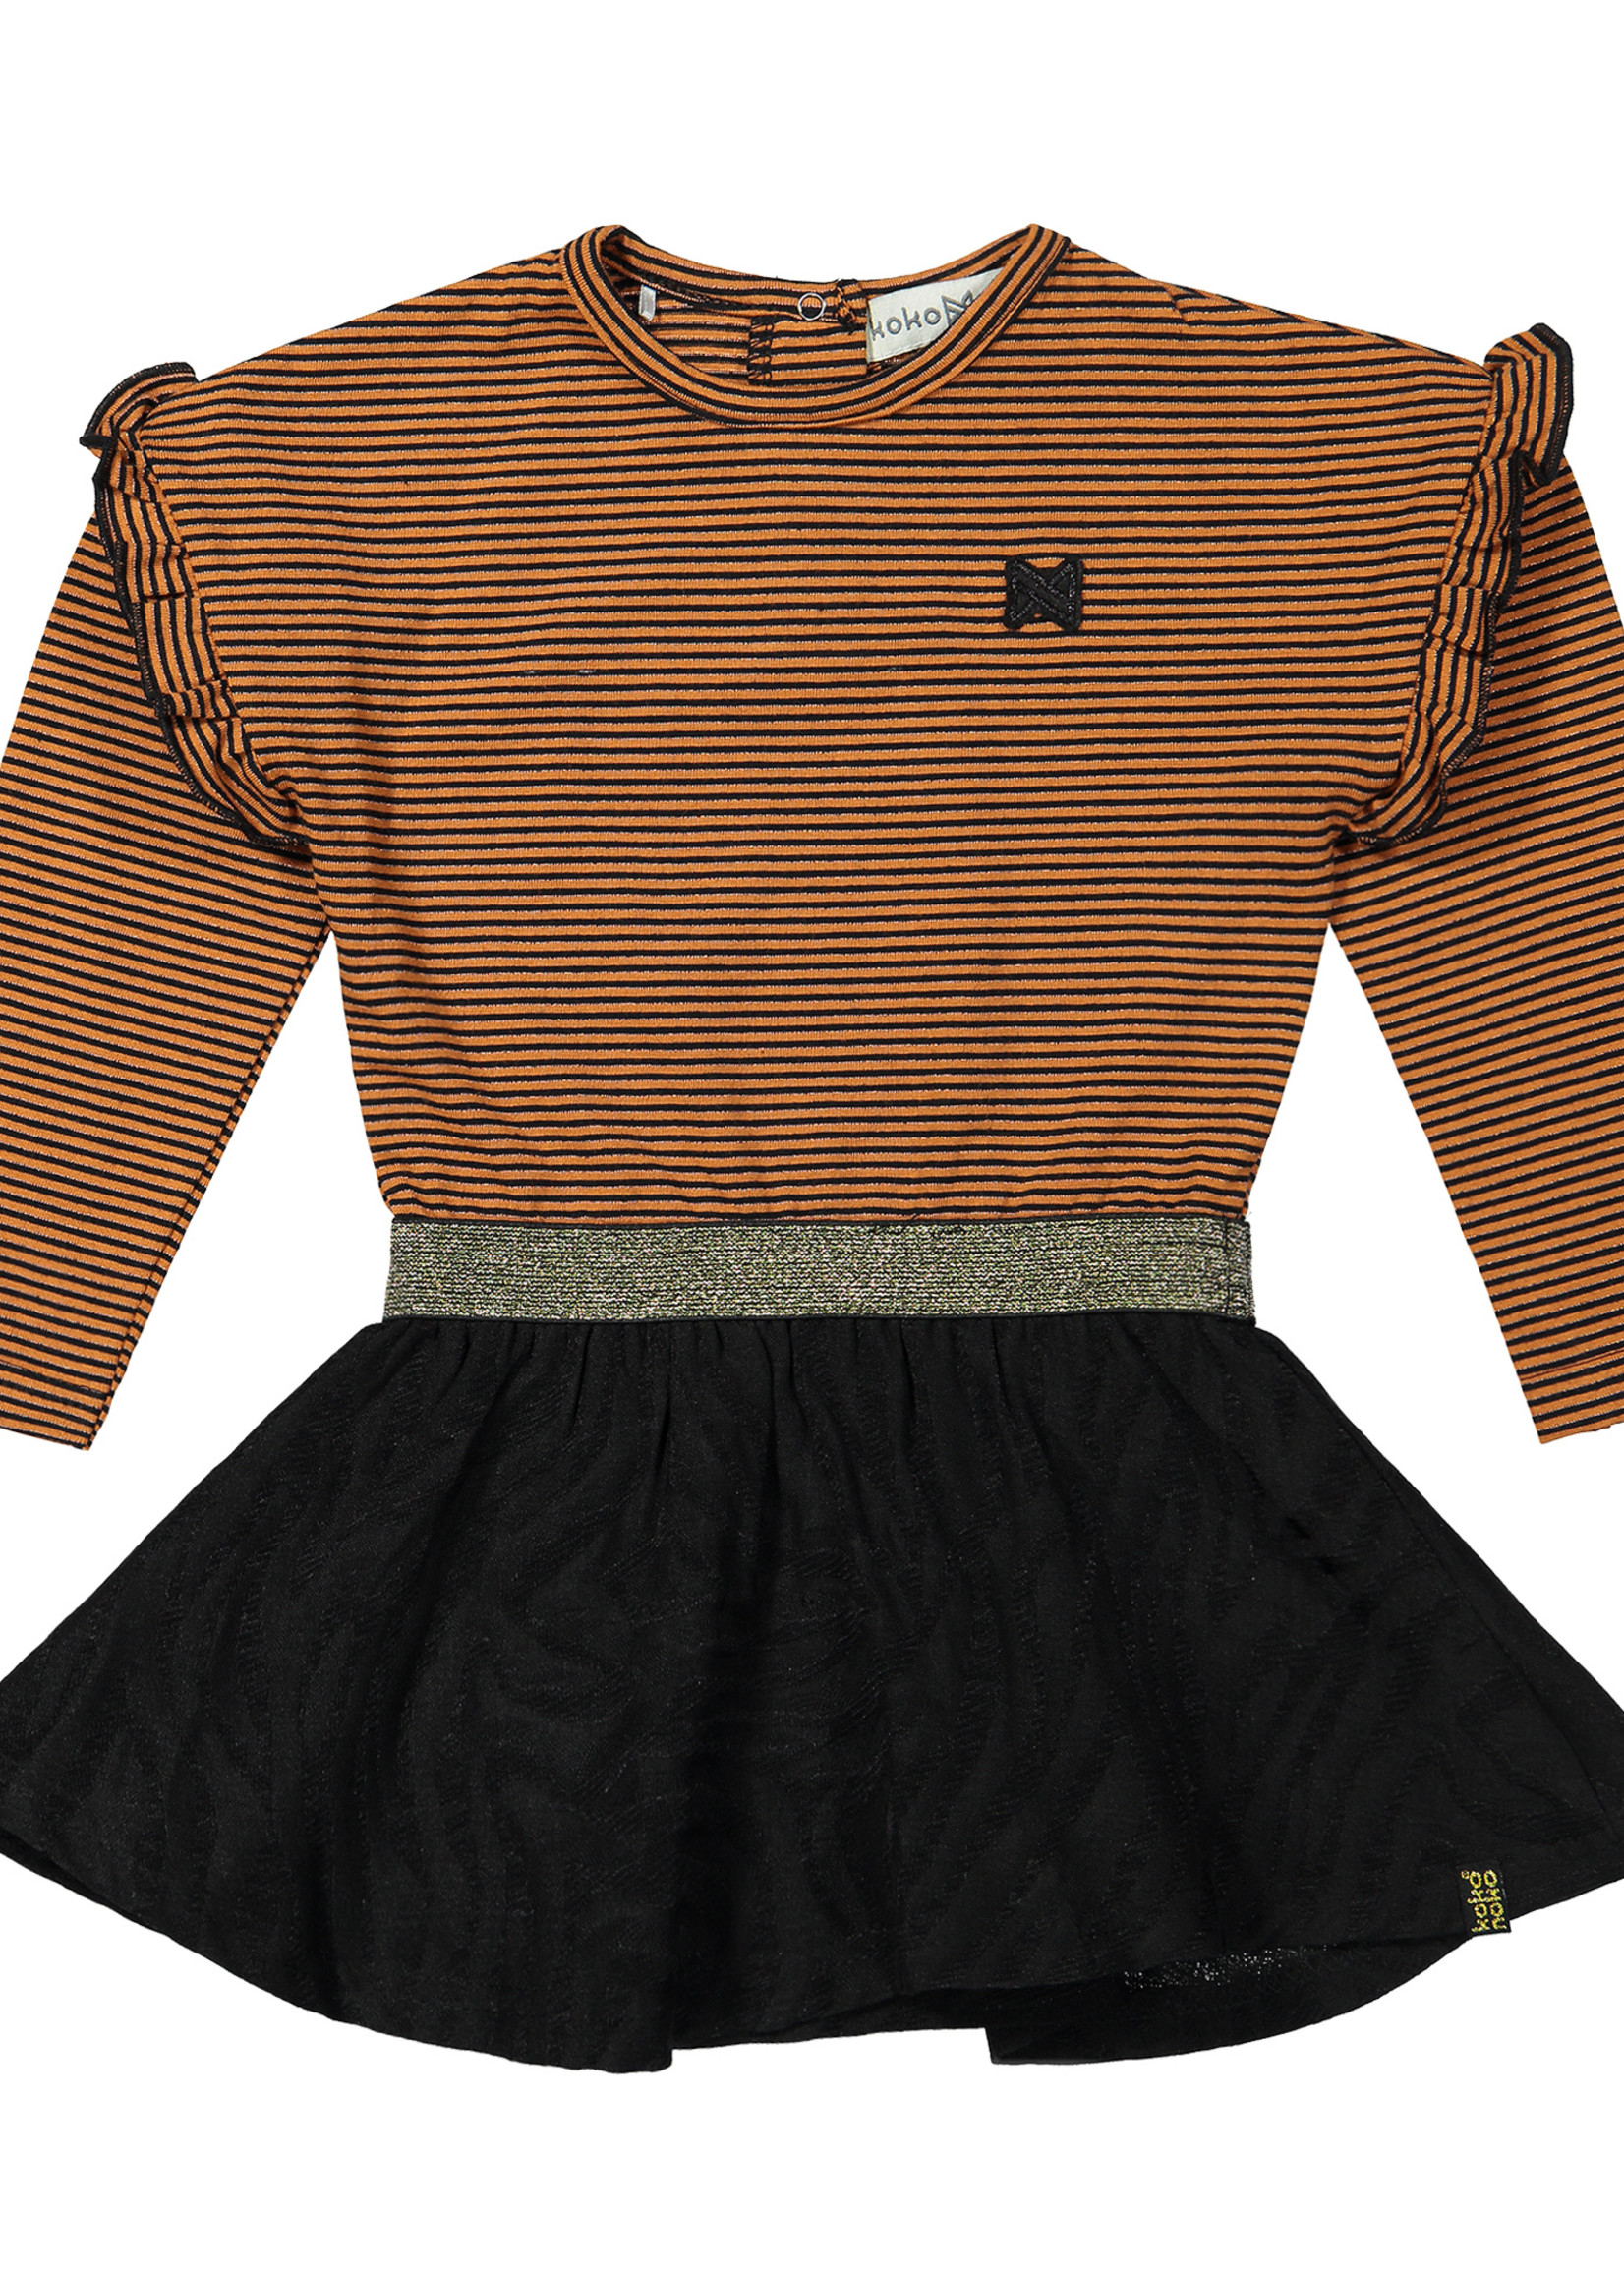 Koko Noko Girls Dress ls, Rusty brown + black, F40985-37